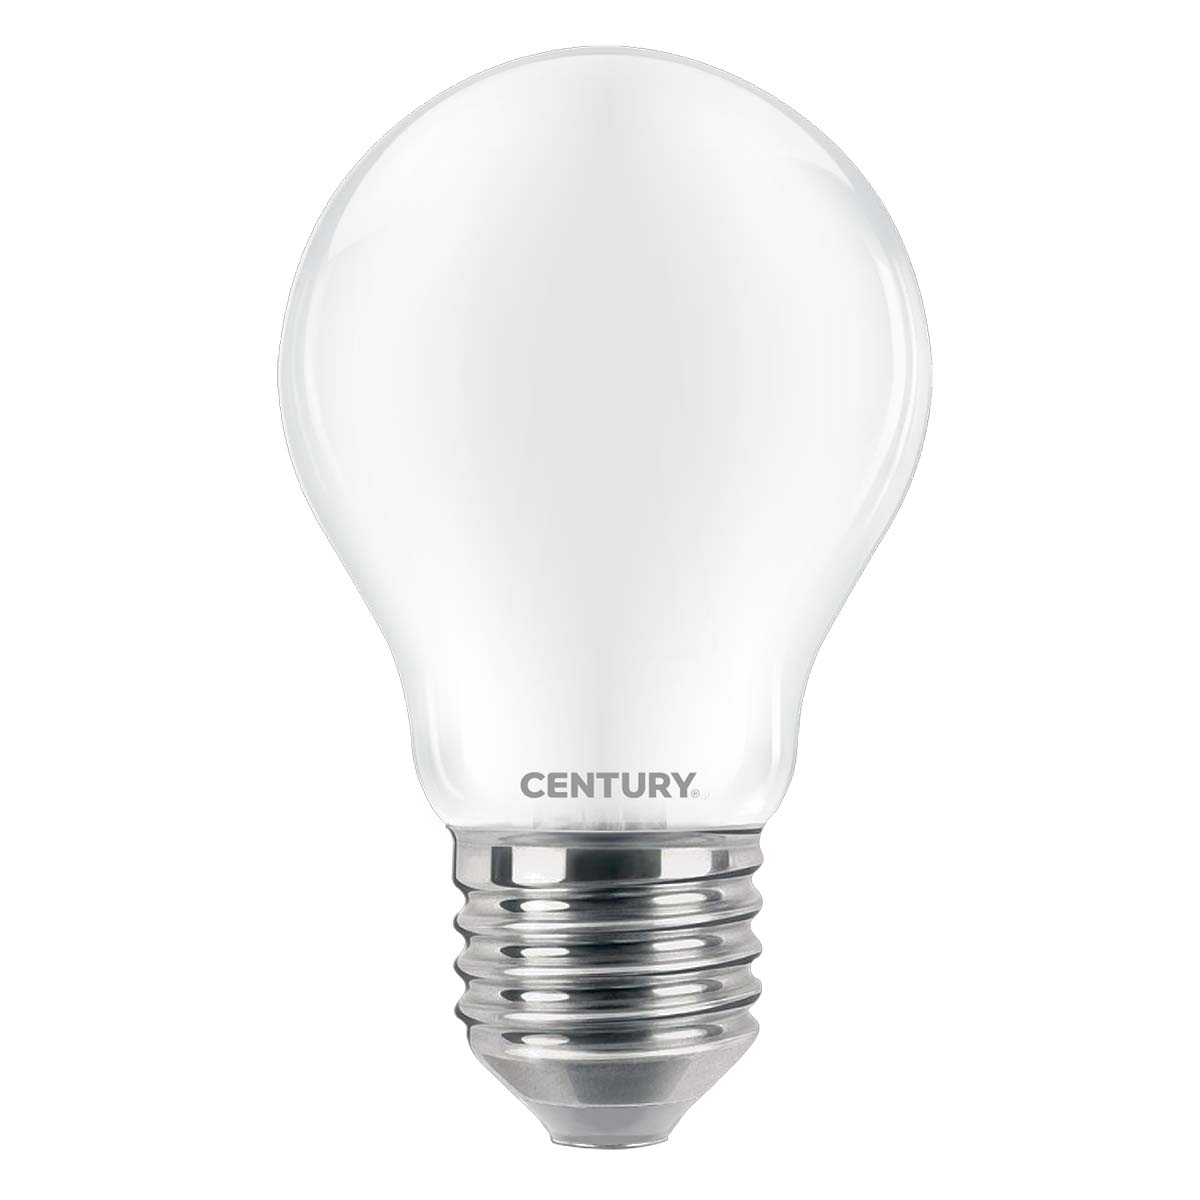 Century LED Vintage Filamentlamp Bol 8 W 810 lm 3000 K | 1 stuks - INSG3-082730